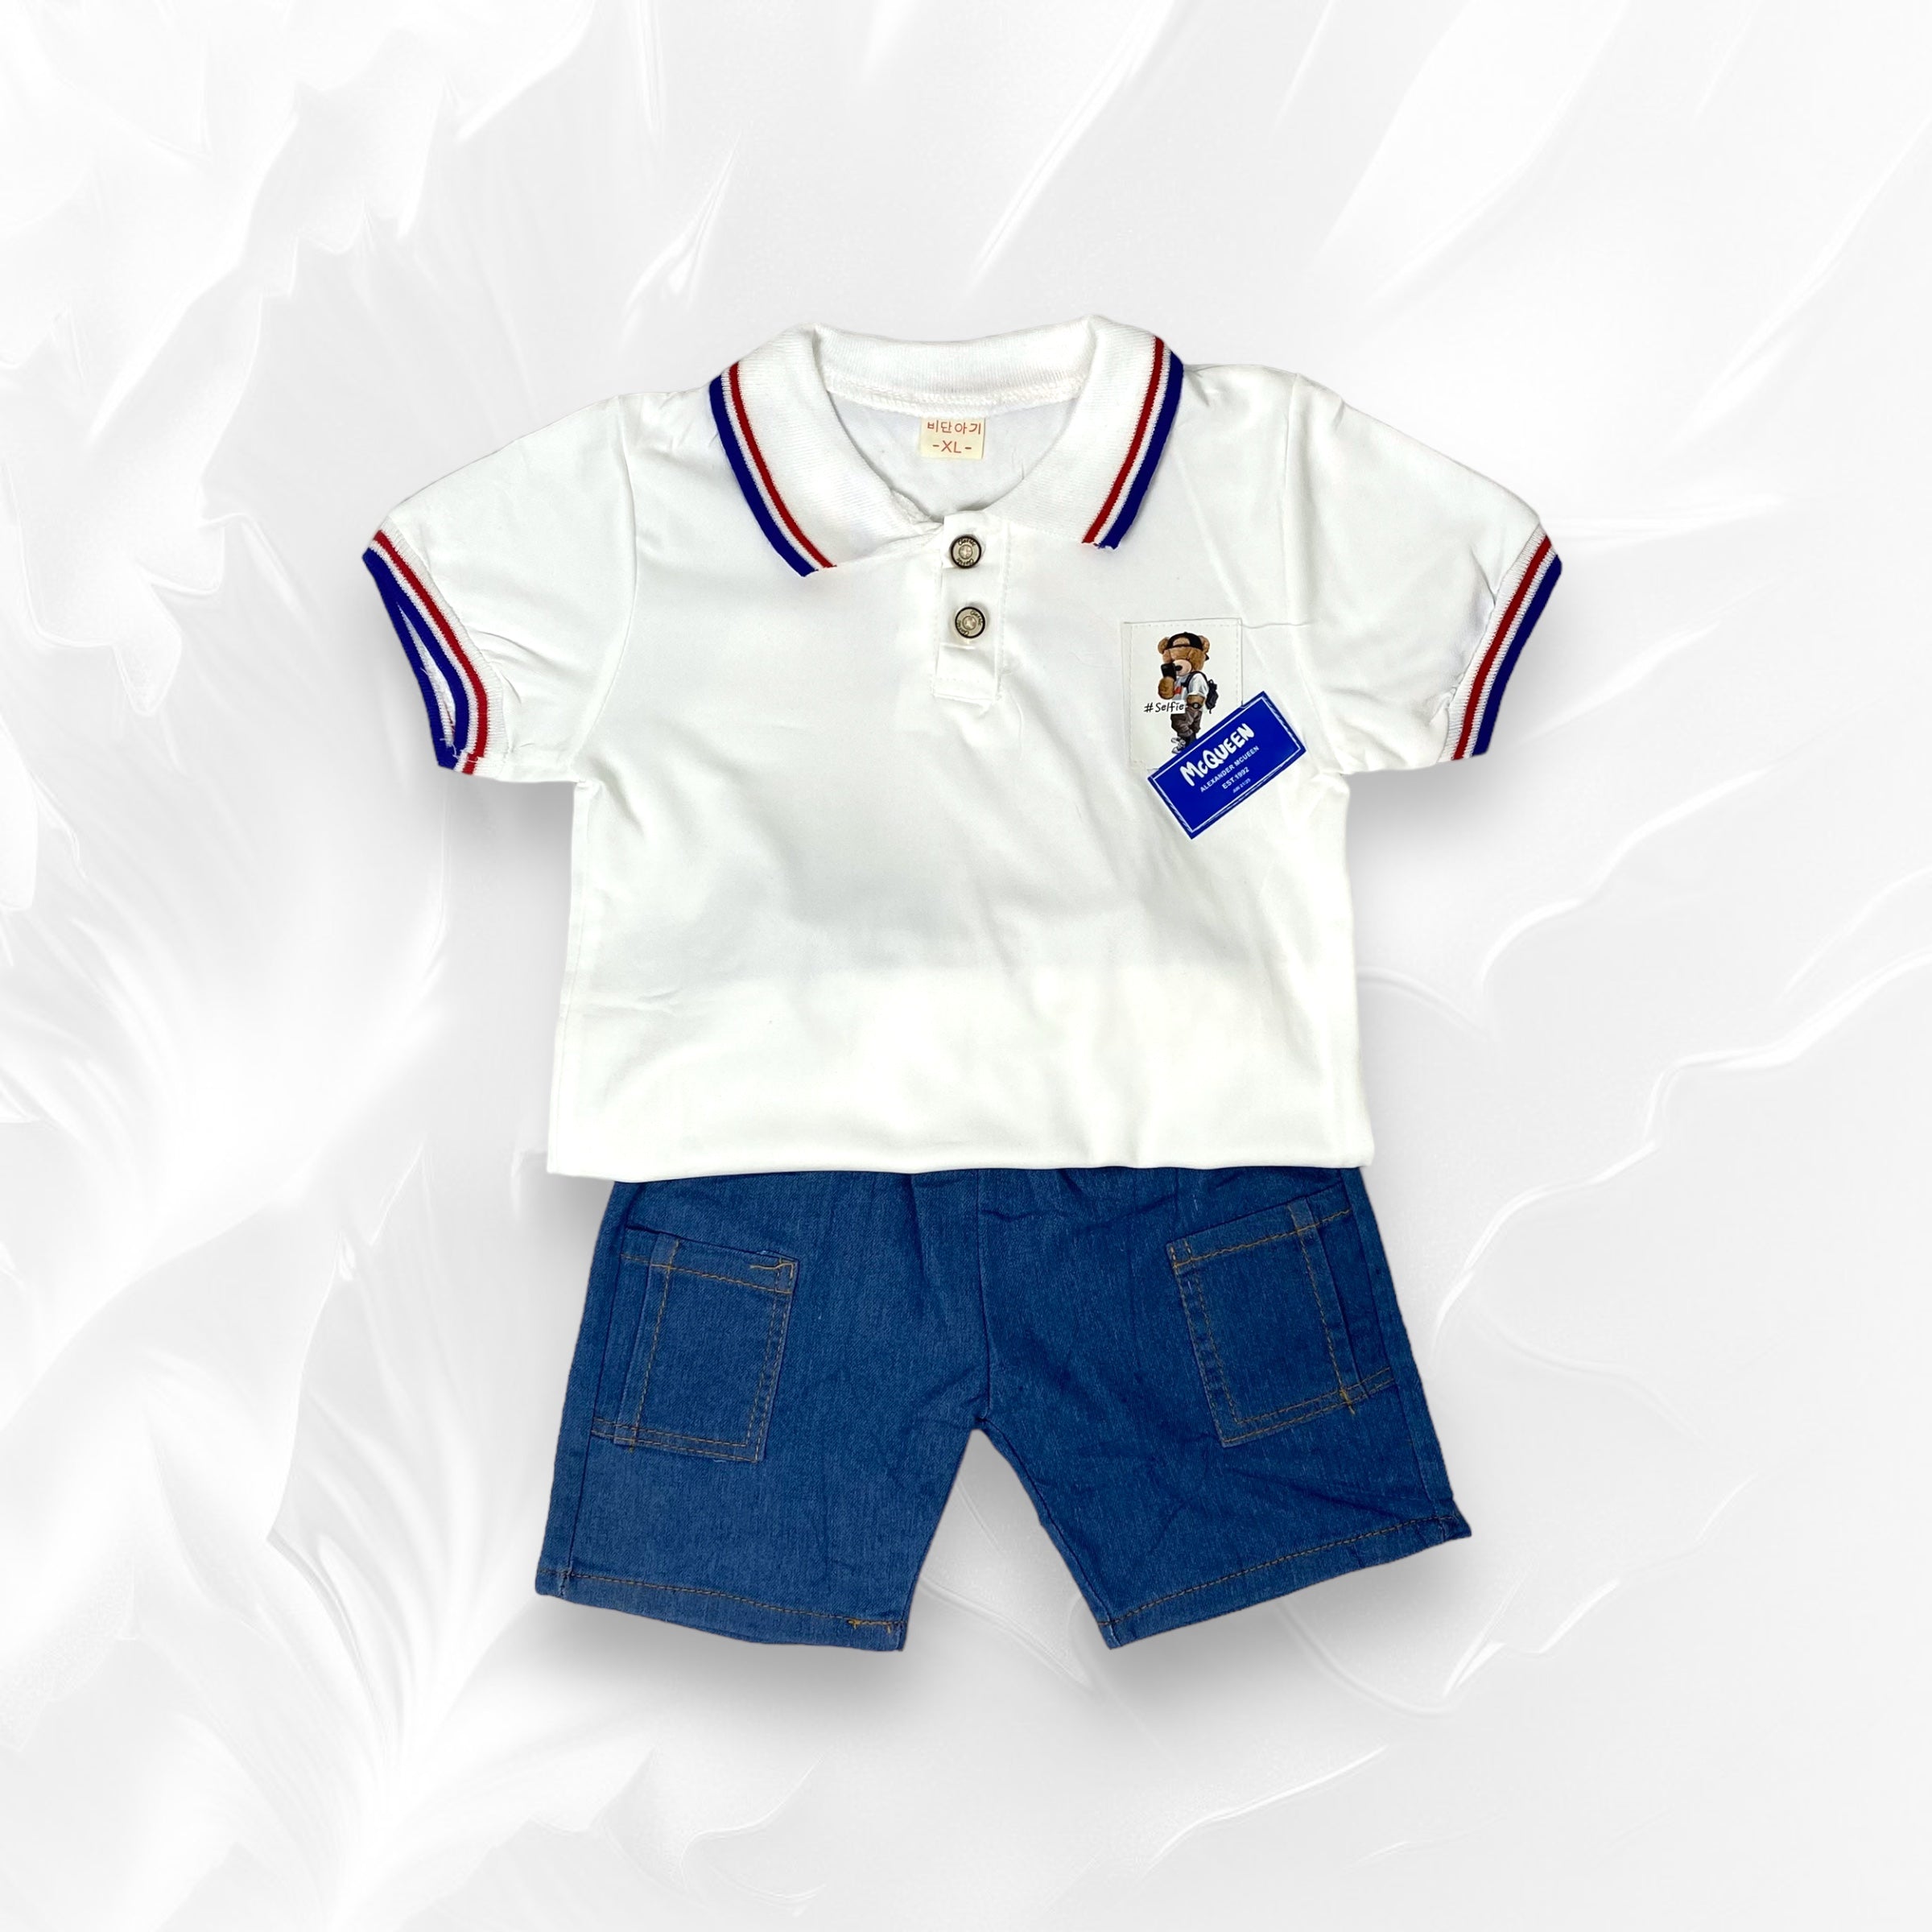 [345402] - Baju Setelan Kaos Polo Kerah Celana Pendek Denim Fashion Import Anak Cowok - Motif Square